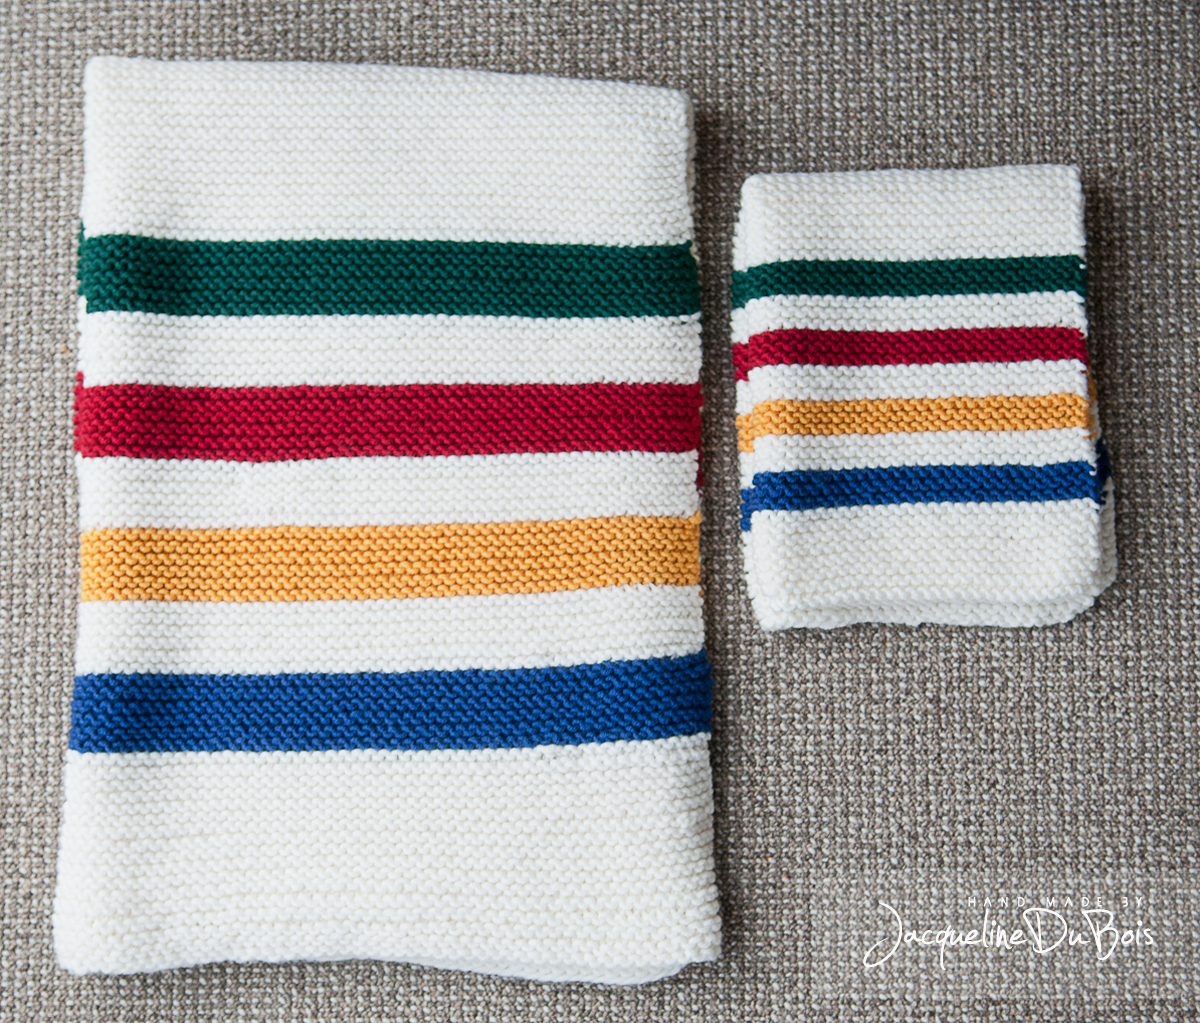 Blanket inspired by Hudson Bay pattern.